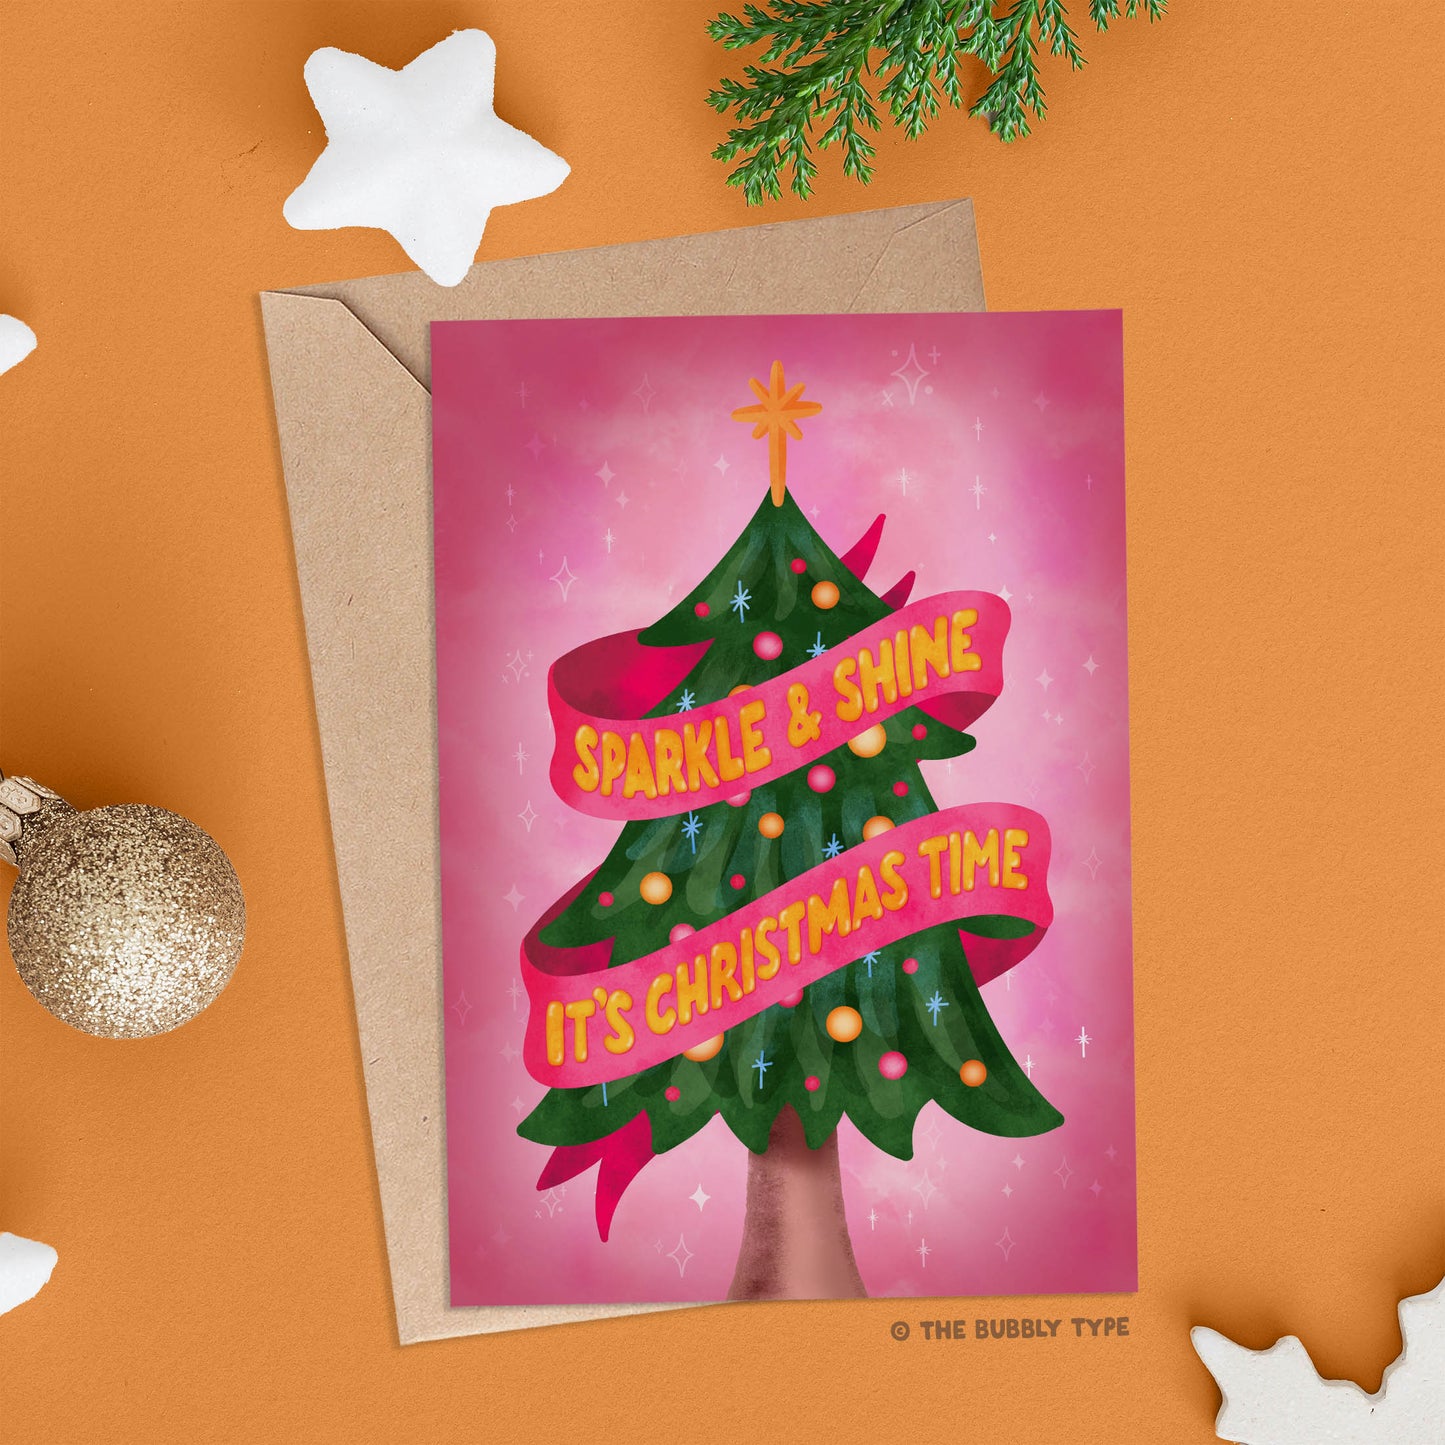 Sparkle & Shine, It's Christmas Time - A6 Christmas Greeting Card